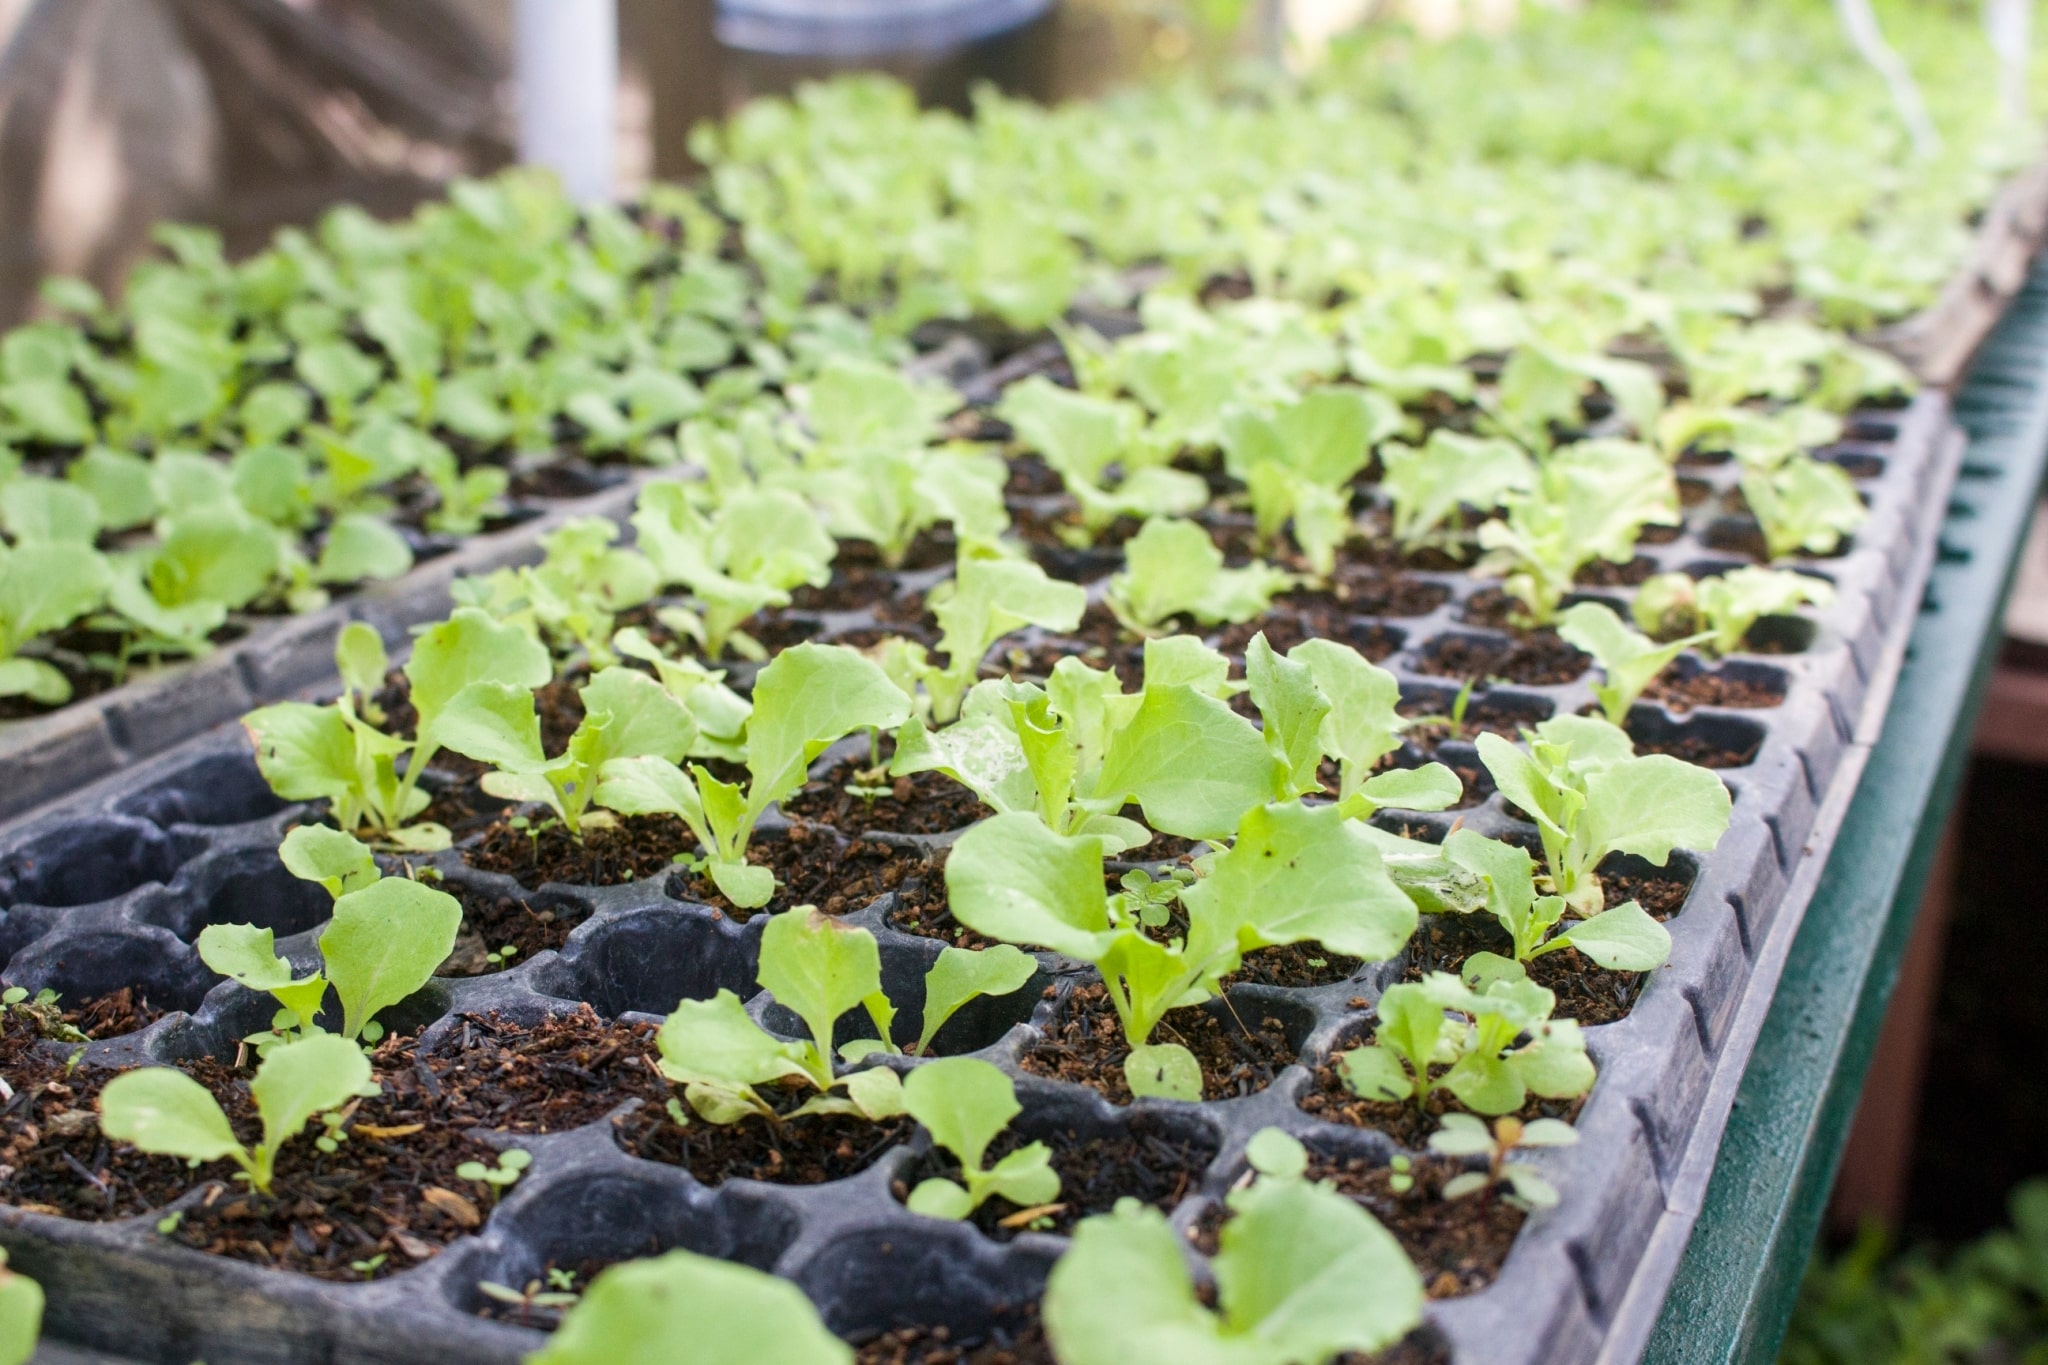 Lettuce seedlings growing healthily in their individual seedling holes. 【Photo by Matt Serrano】